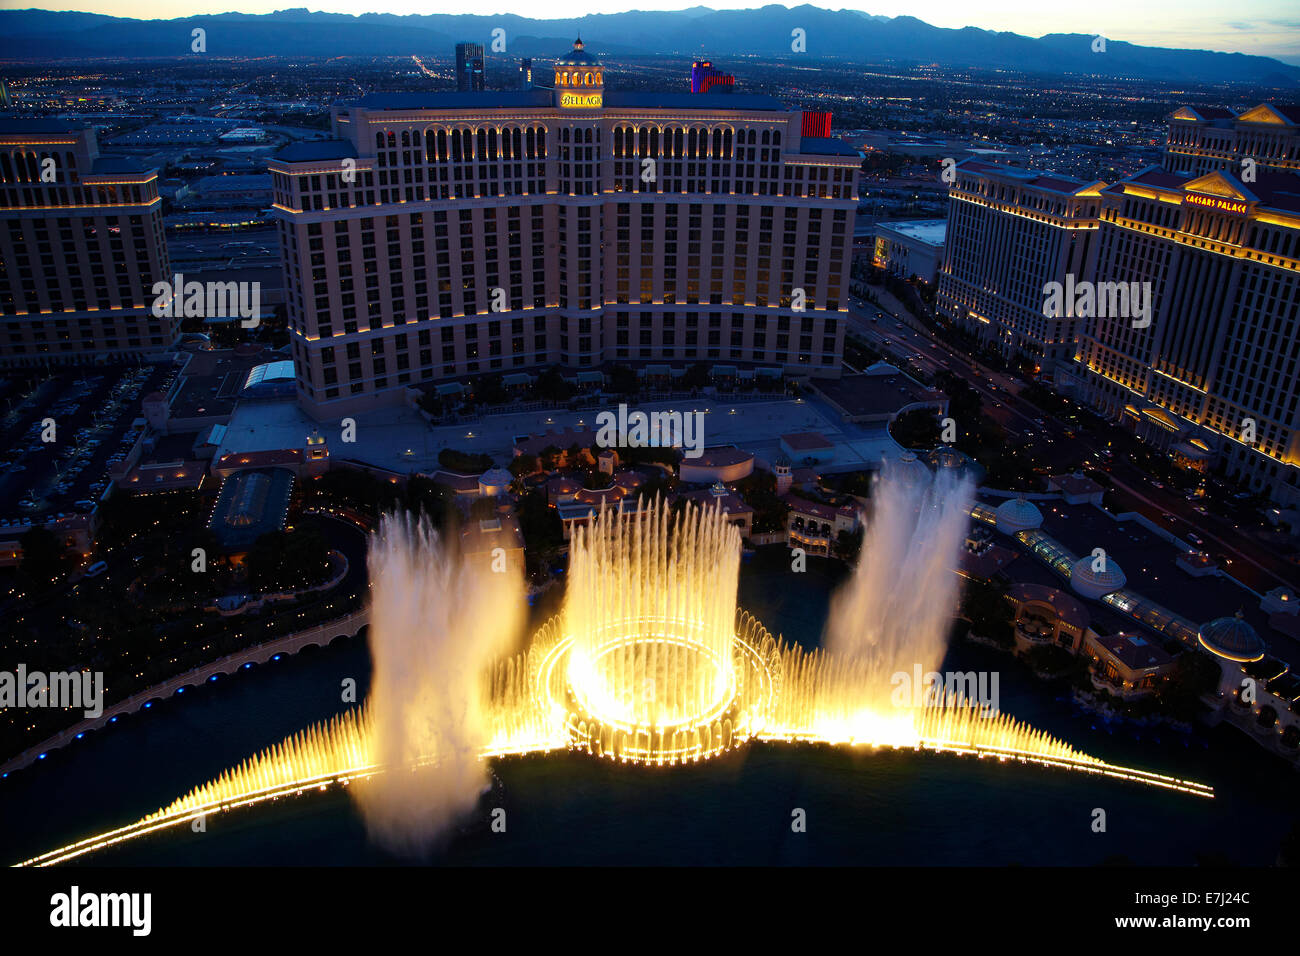 Fountains of Bellagio, Bellagio Hotel and Casino, The Strip, Las Vegas, Nevada, USA Stock Photo